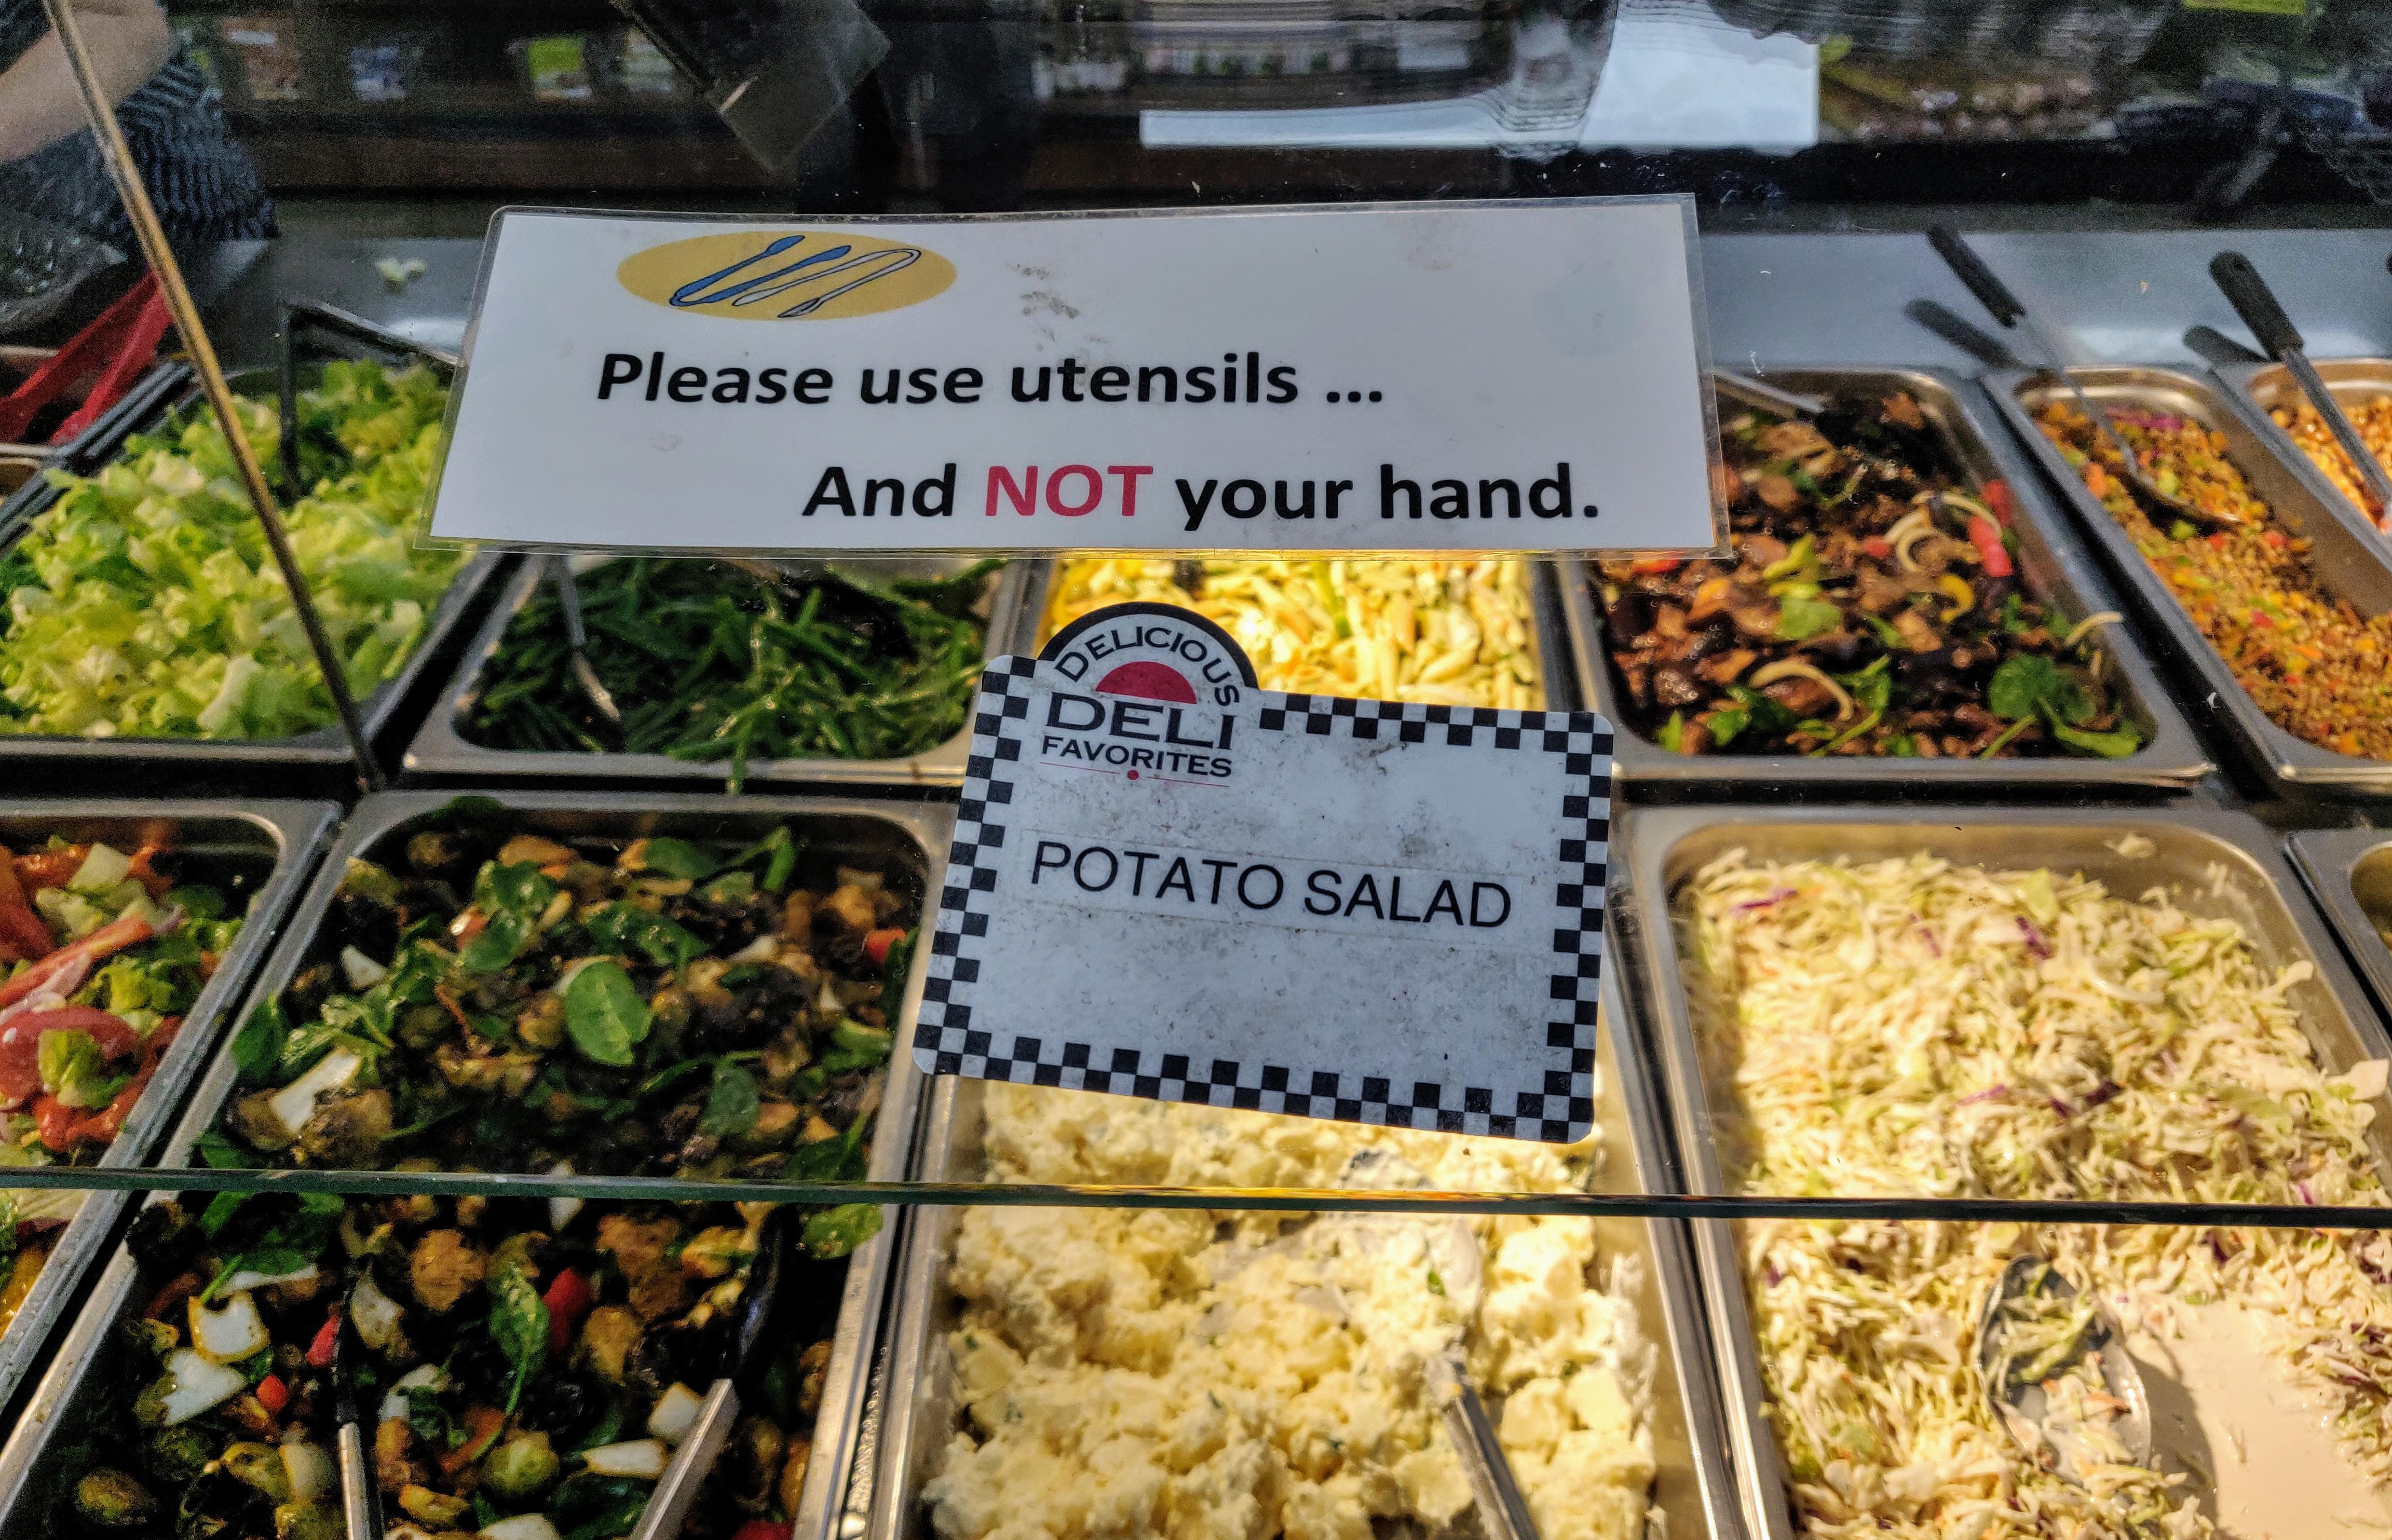 And Not your hand. Euca Deli Favorites Potato Salad